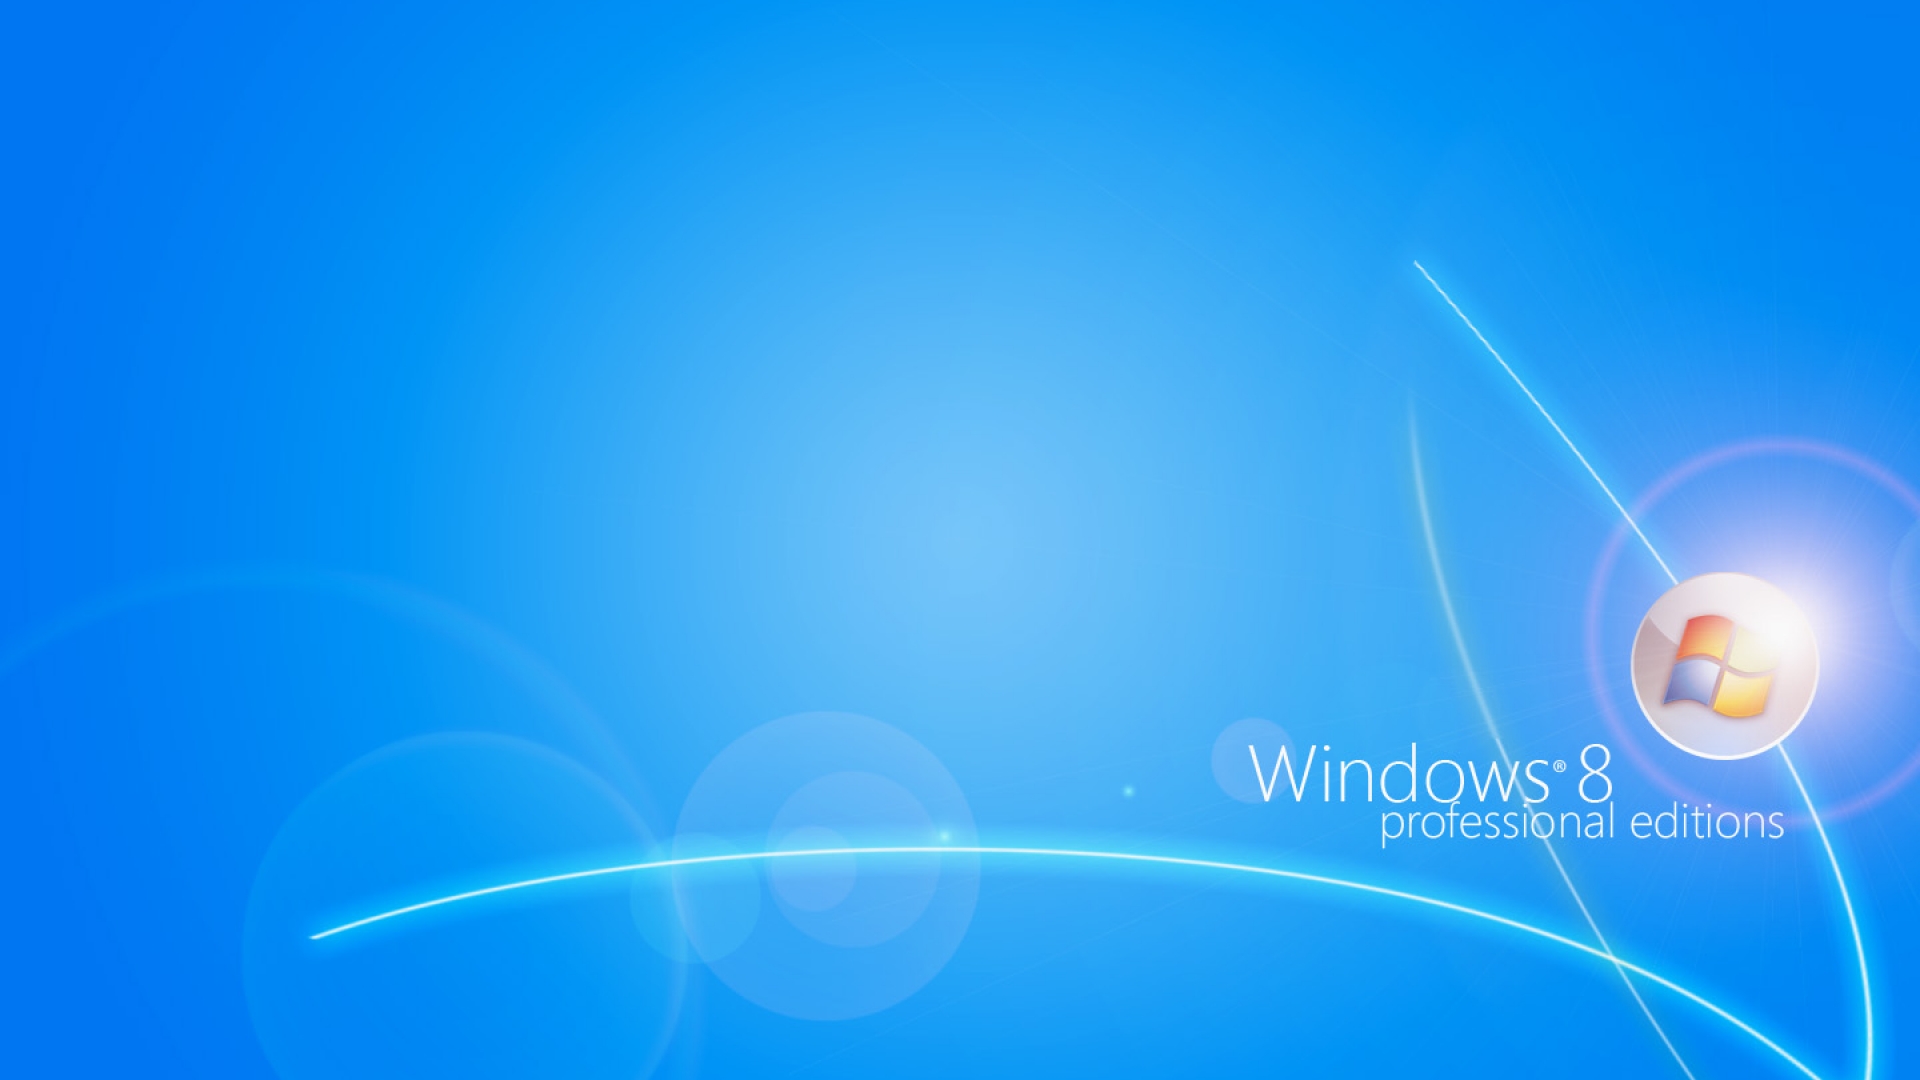 Windows 8 Pro Wallpaper